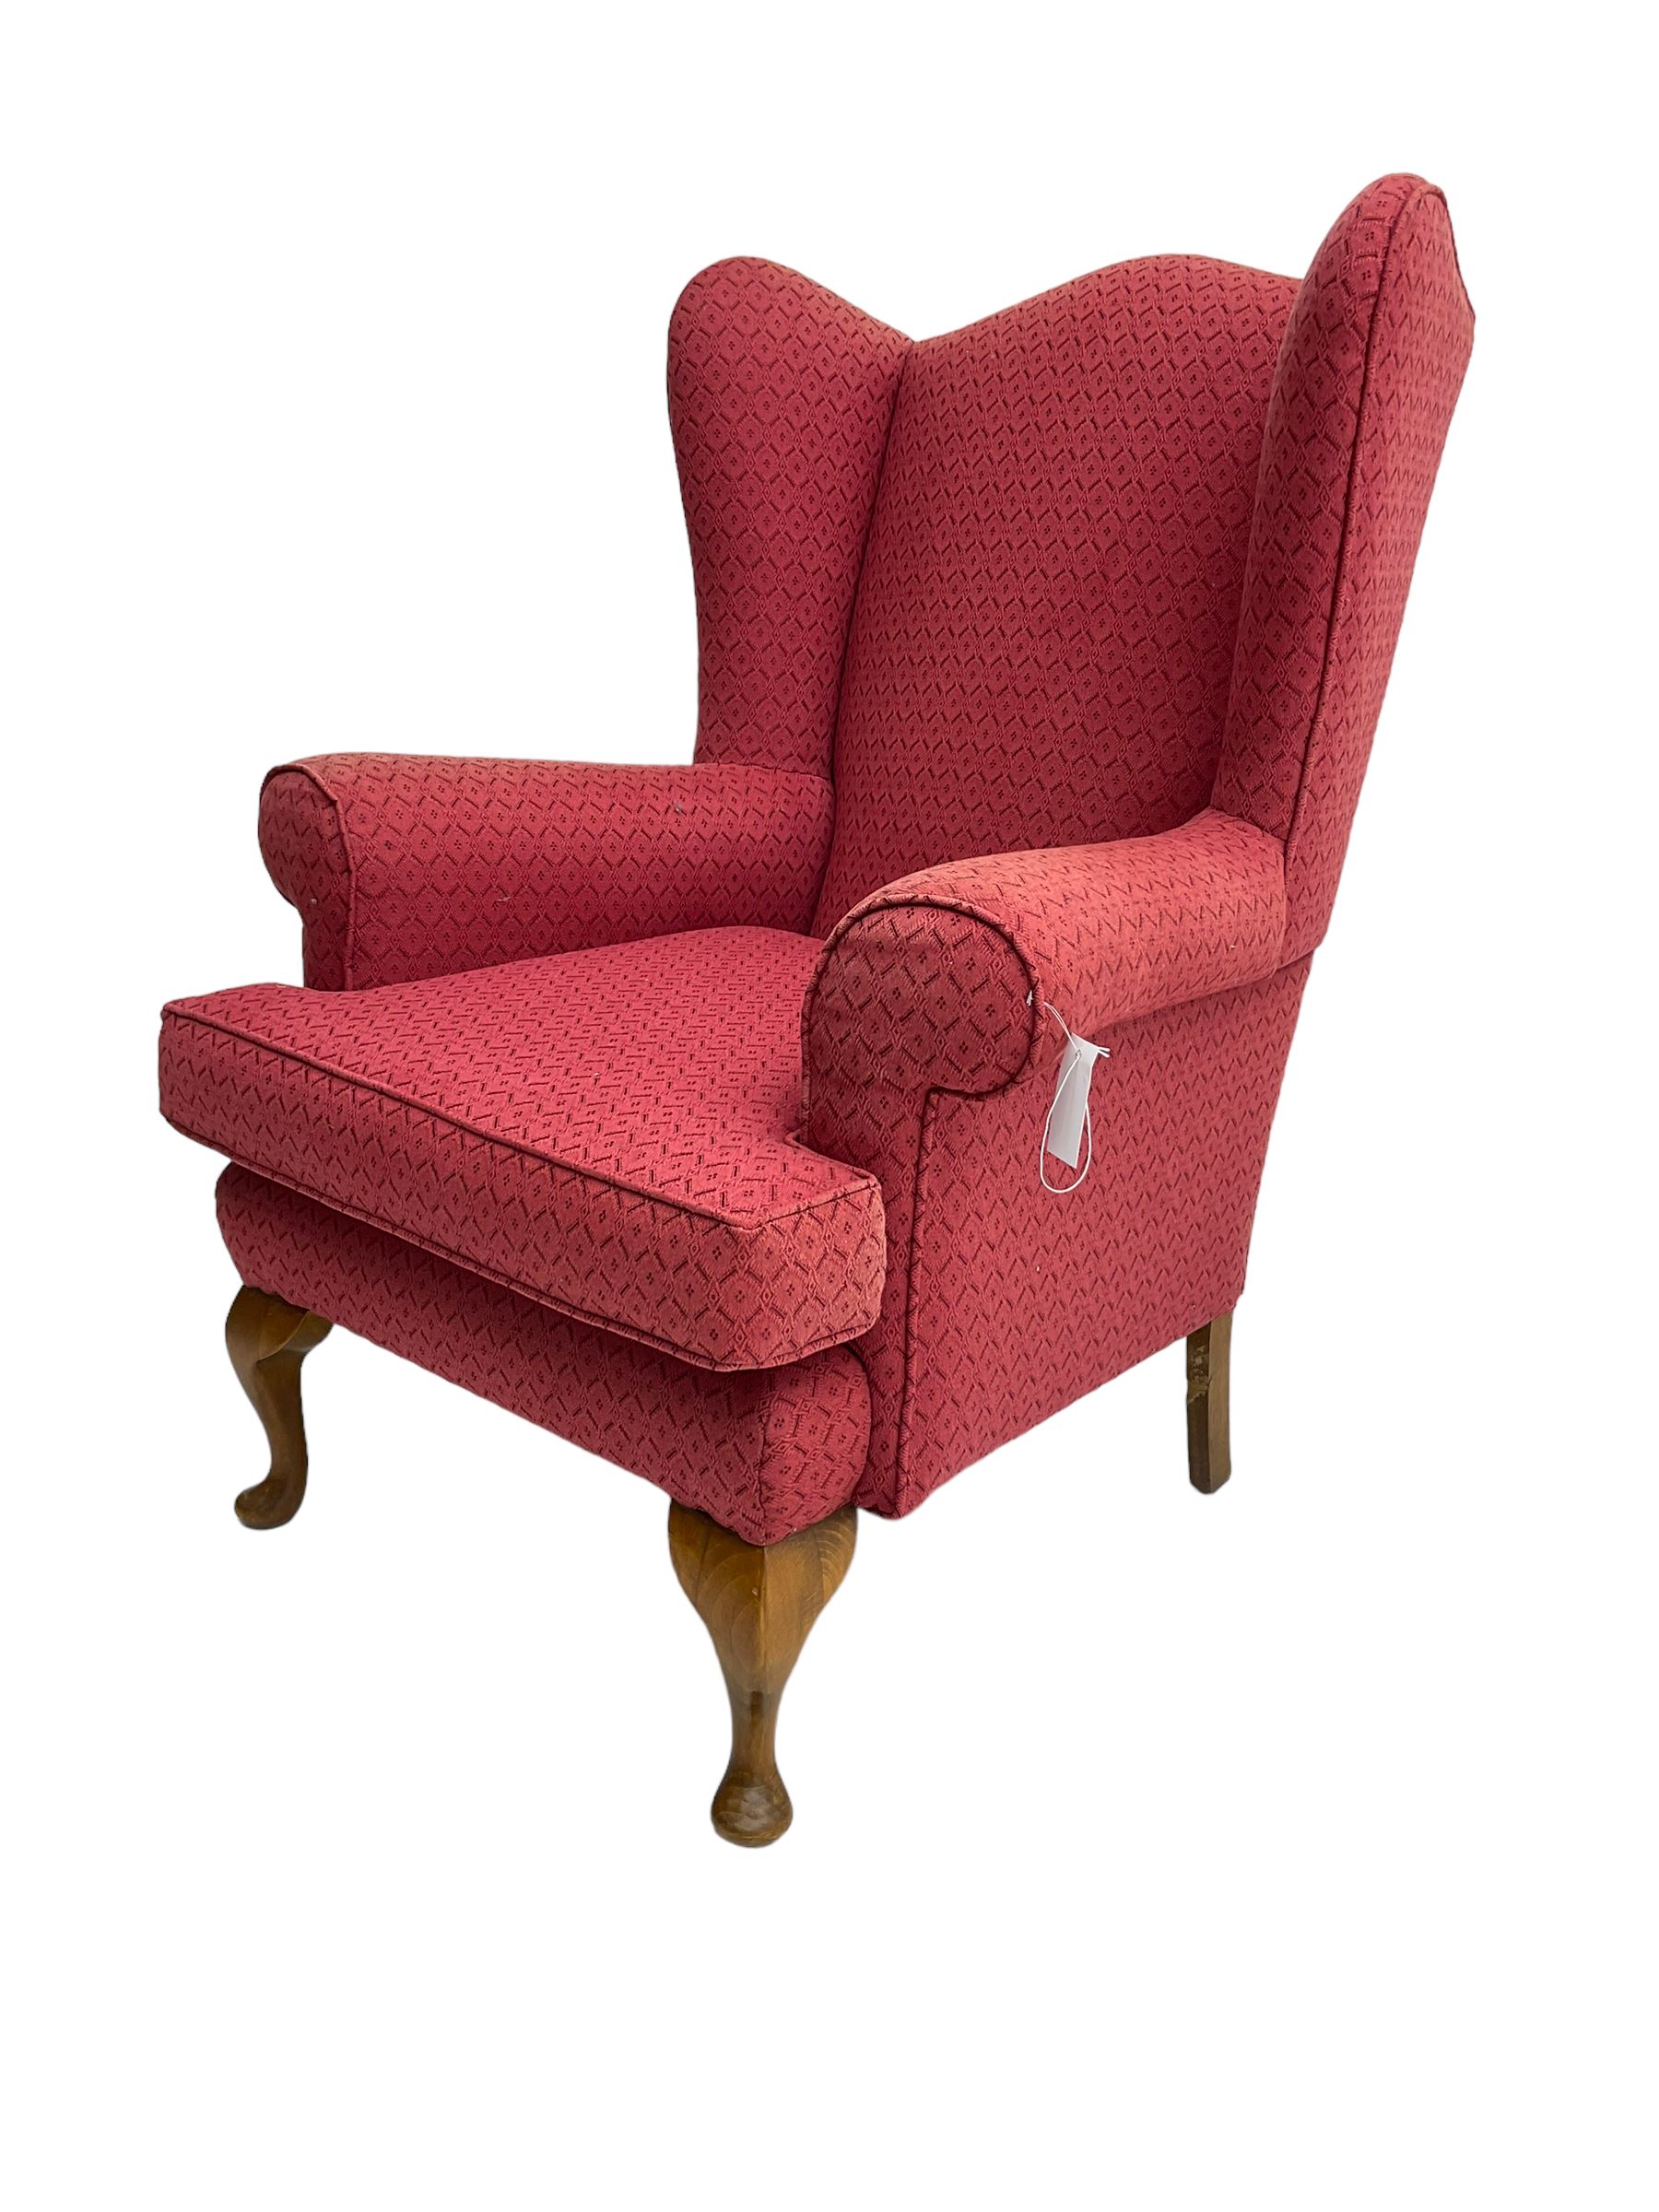 Queen Anne design wingback armchair